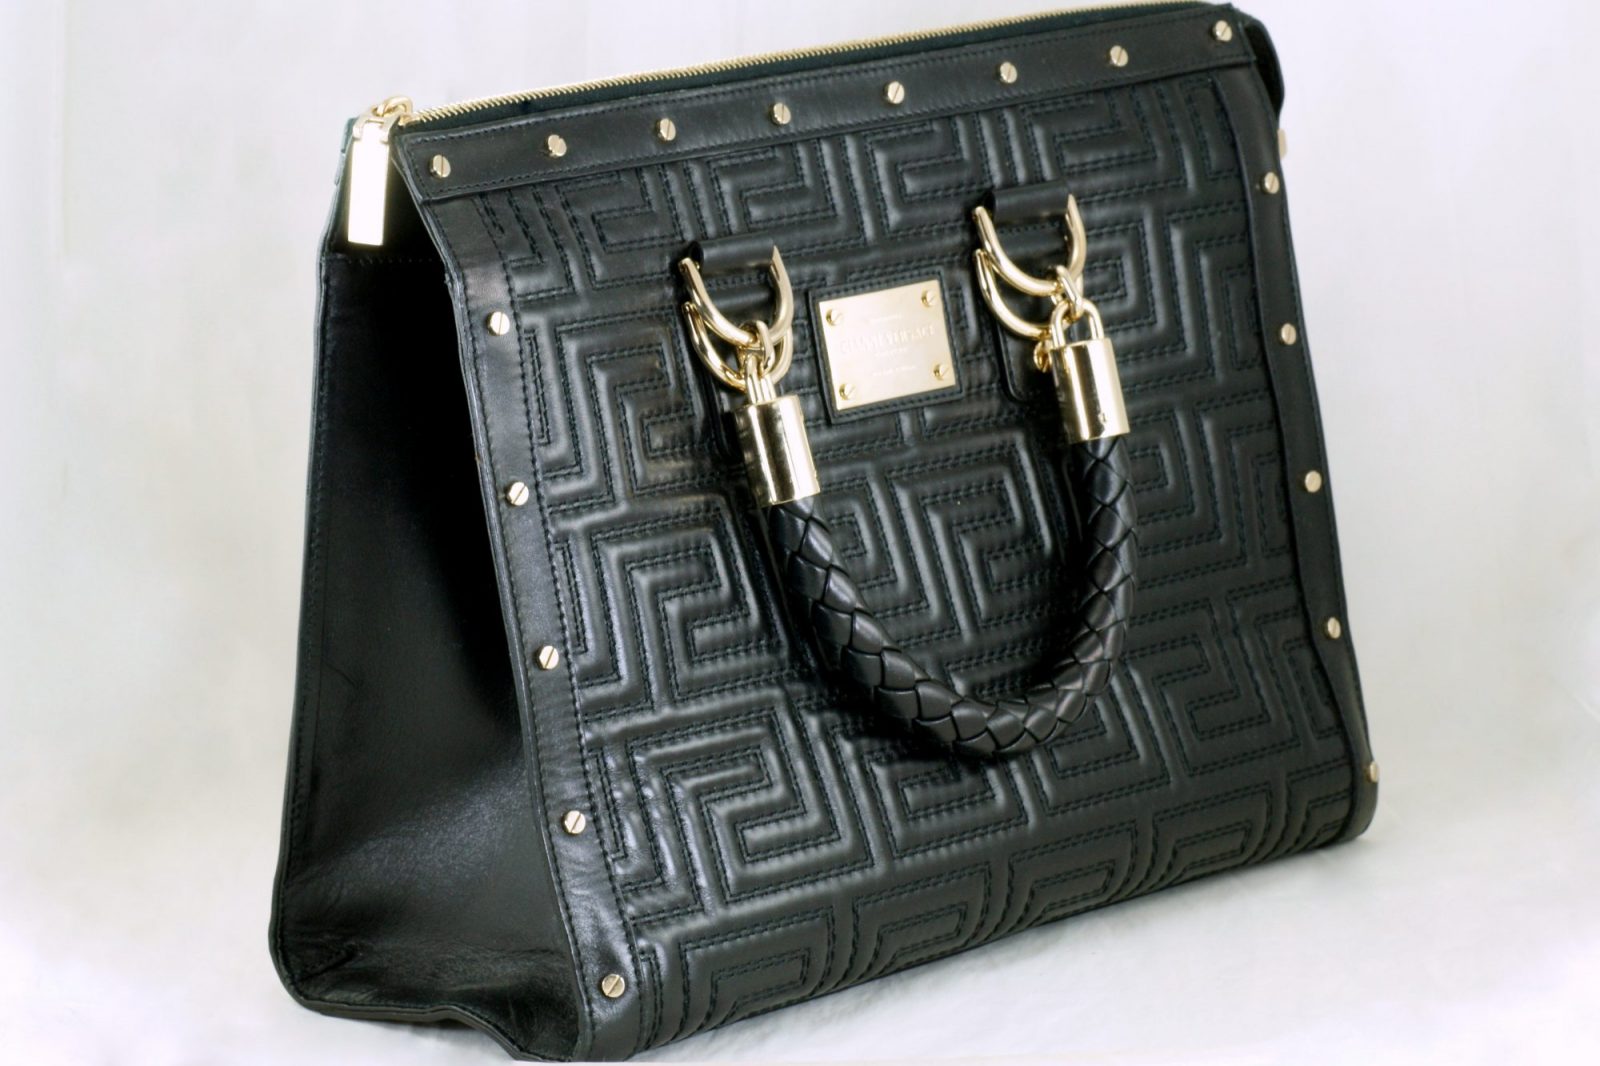 Versace Greek Key Black And White Handbag - Tagotee